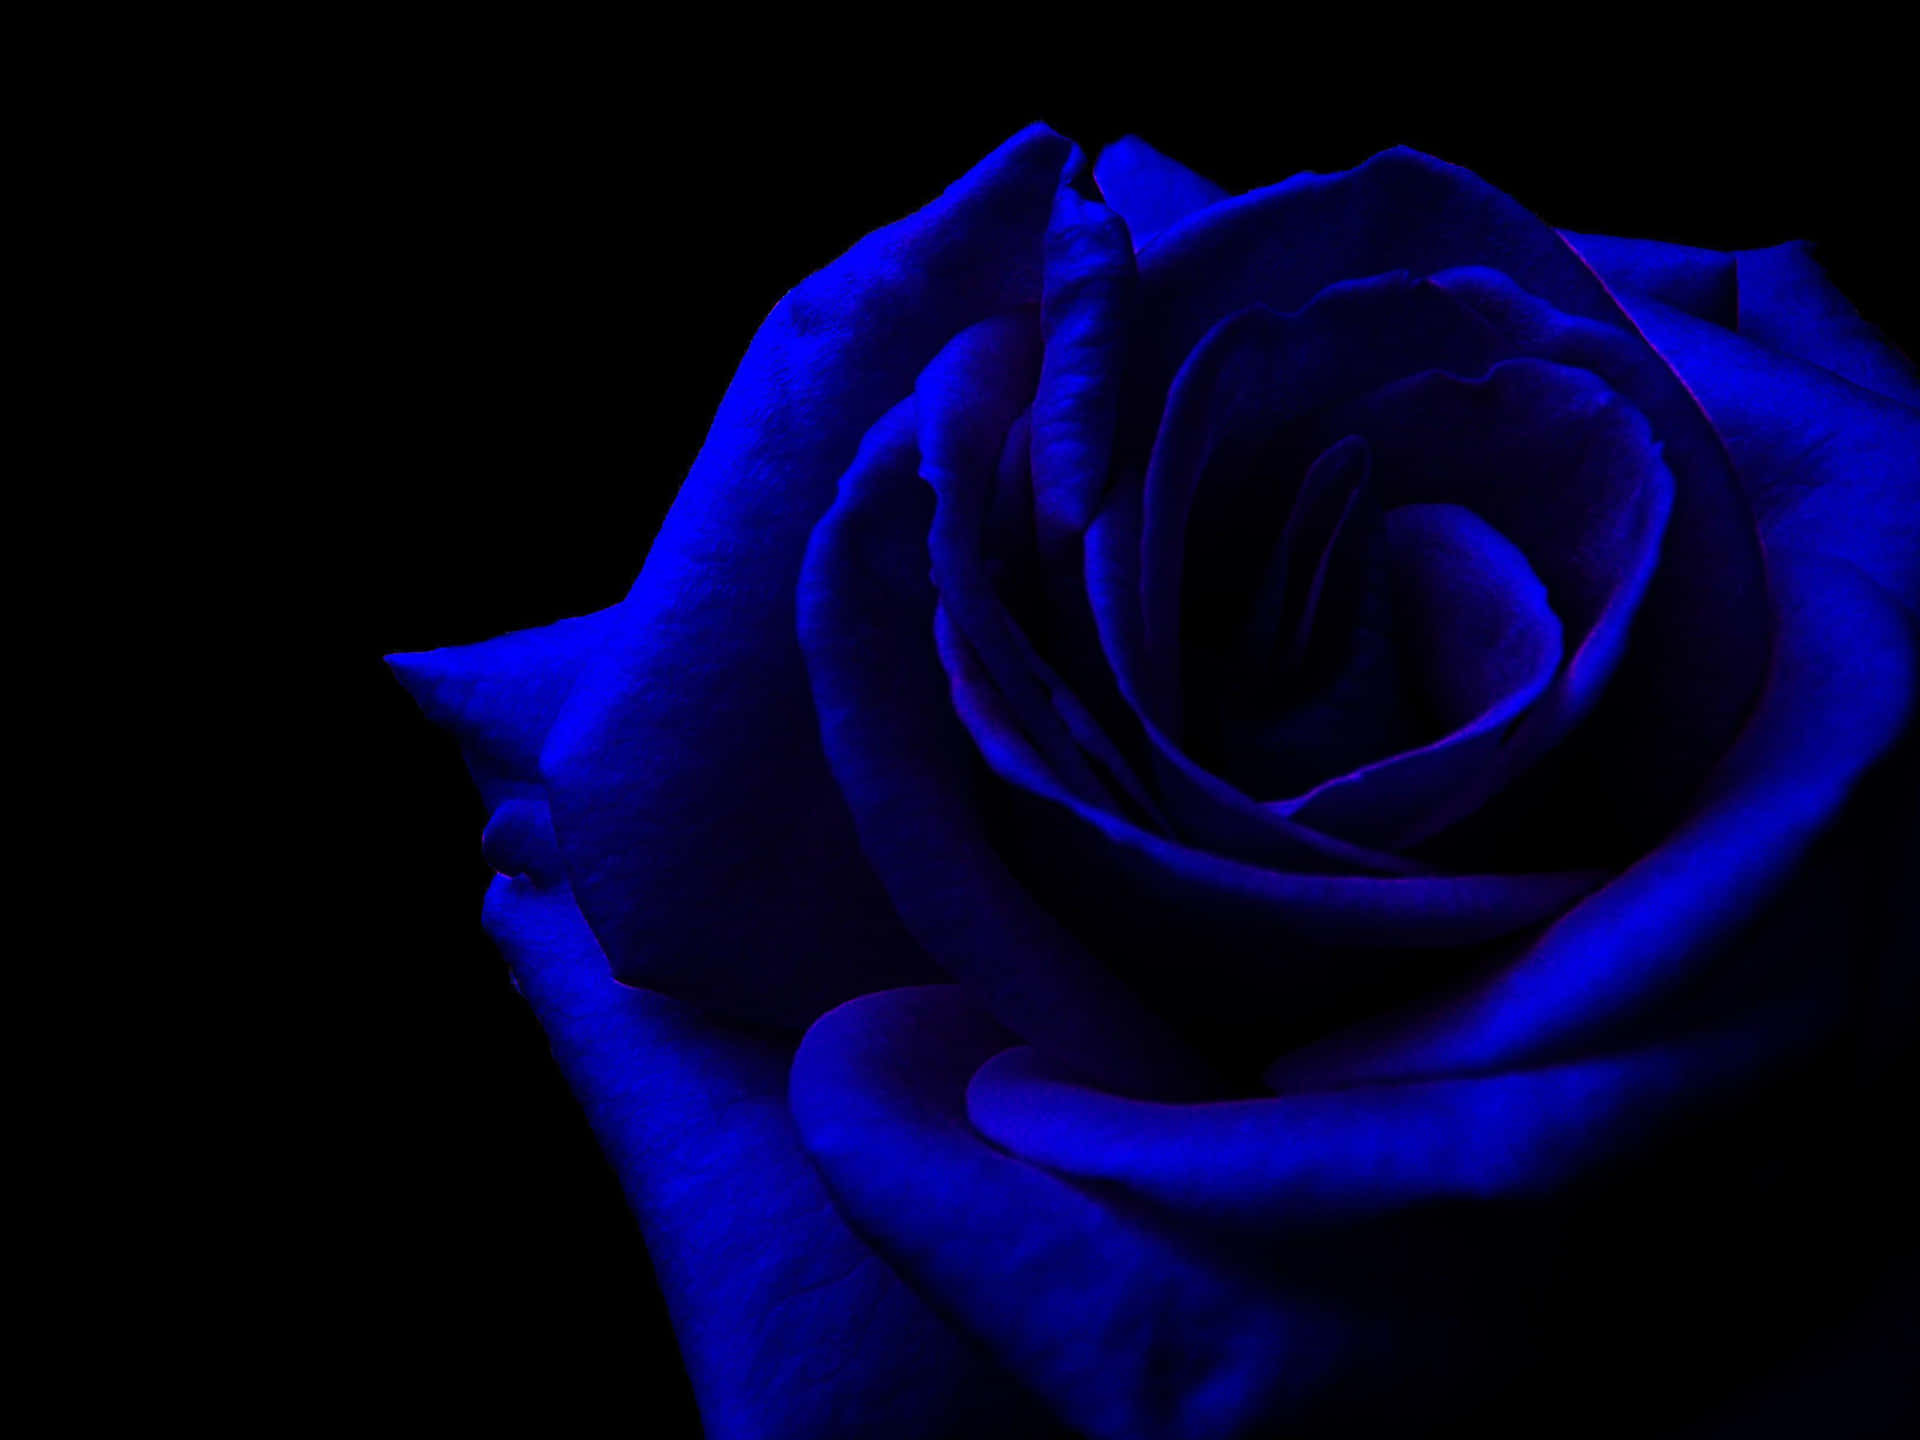 A Blue Rose On A Black Background Background